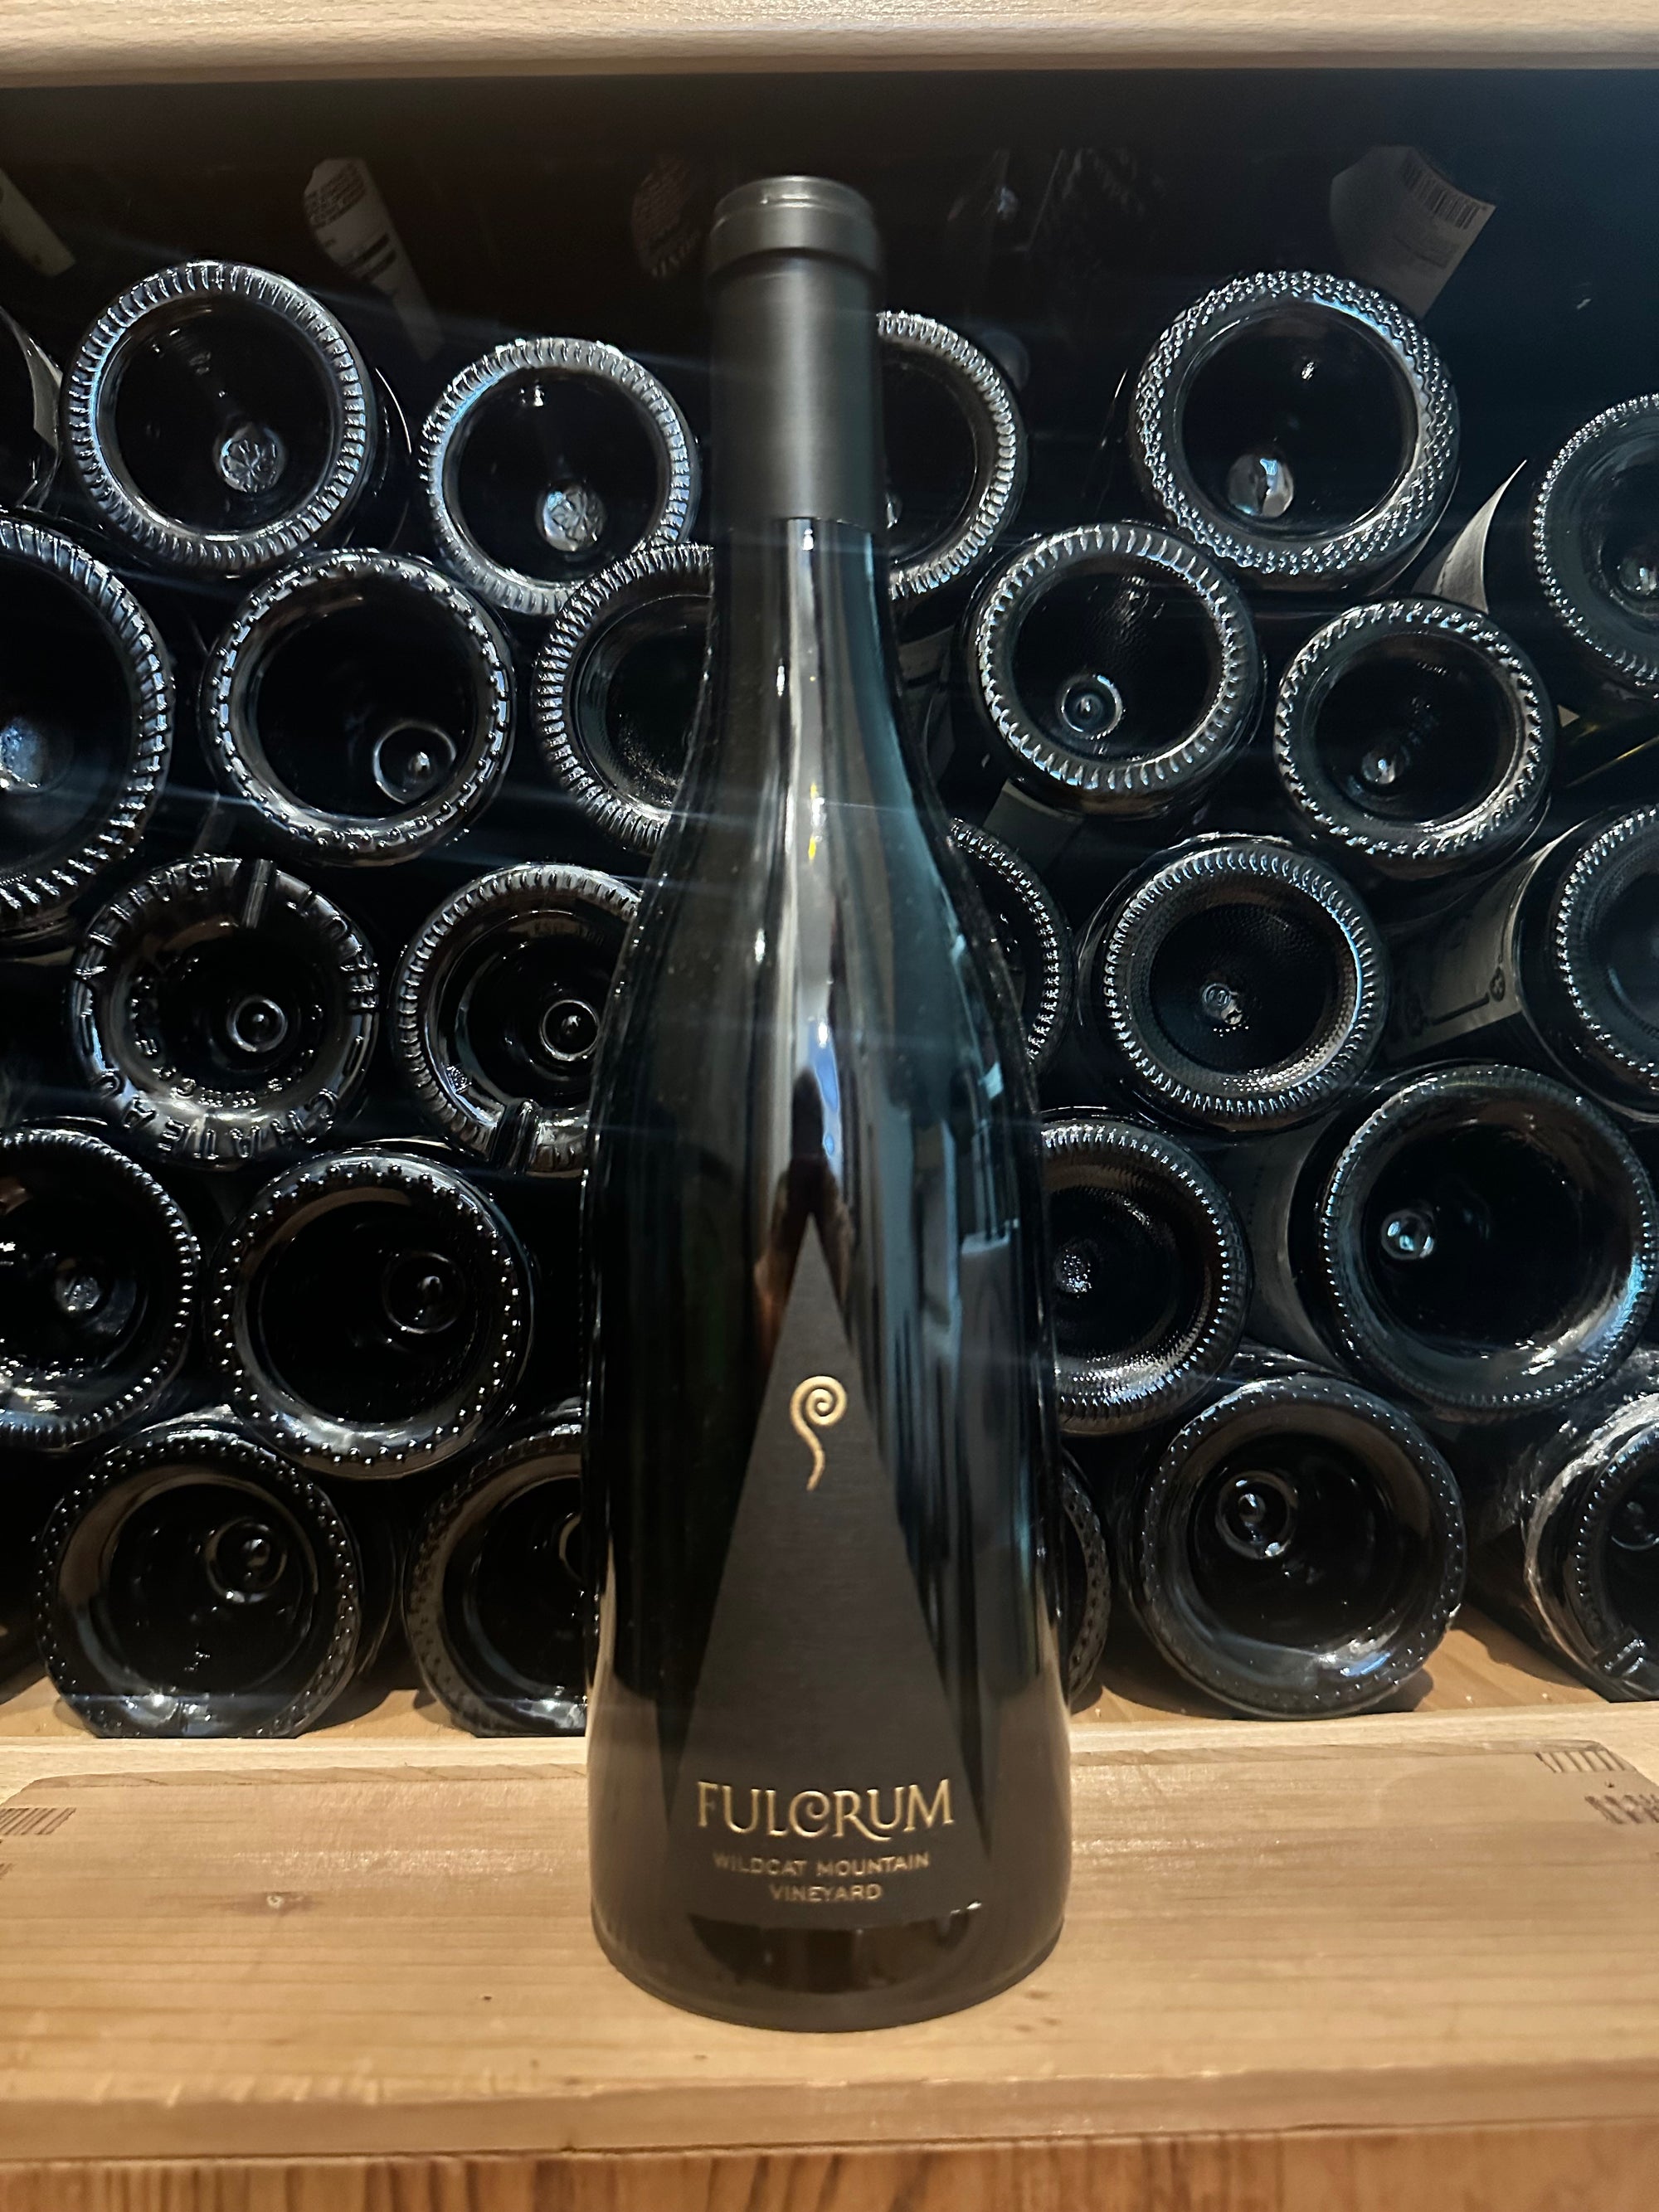 Fulcrum 'Wildcat Mountain' Pinot Noir 2021